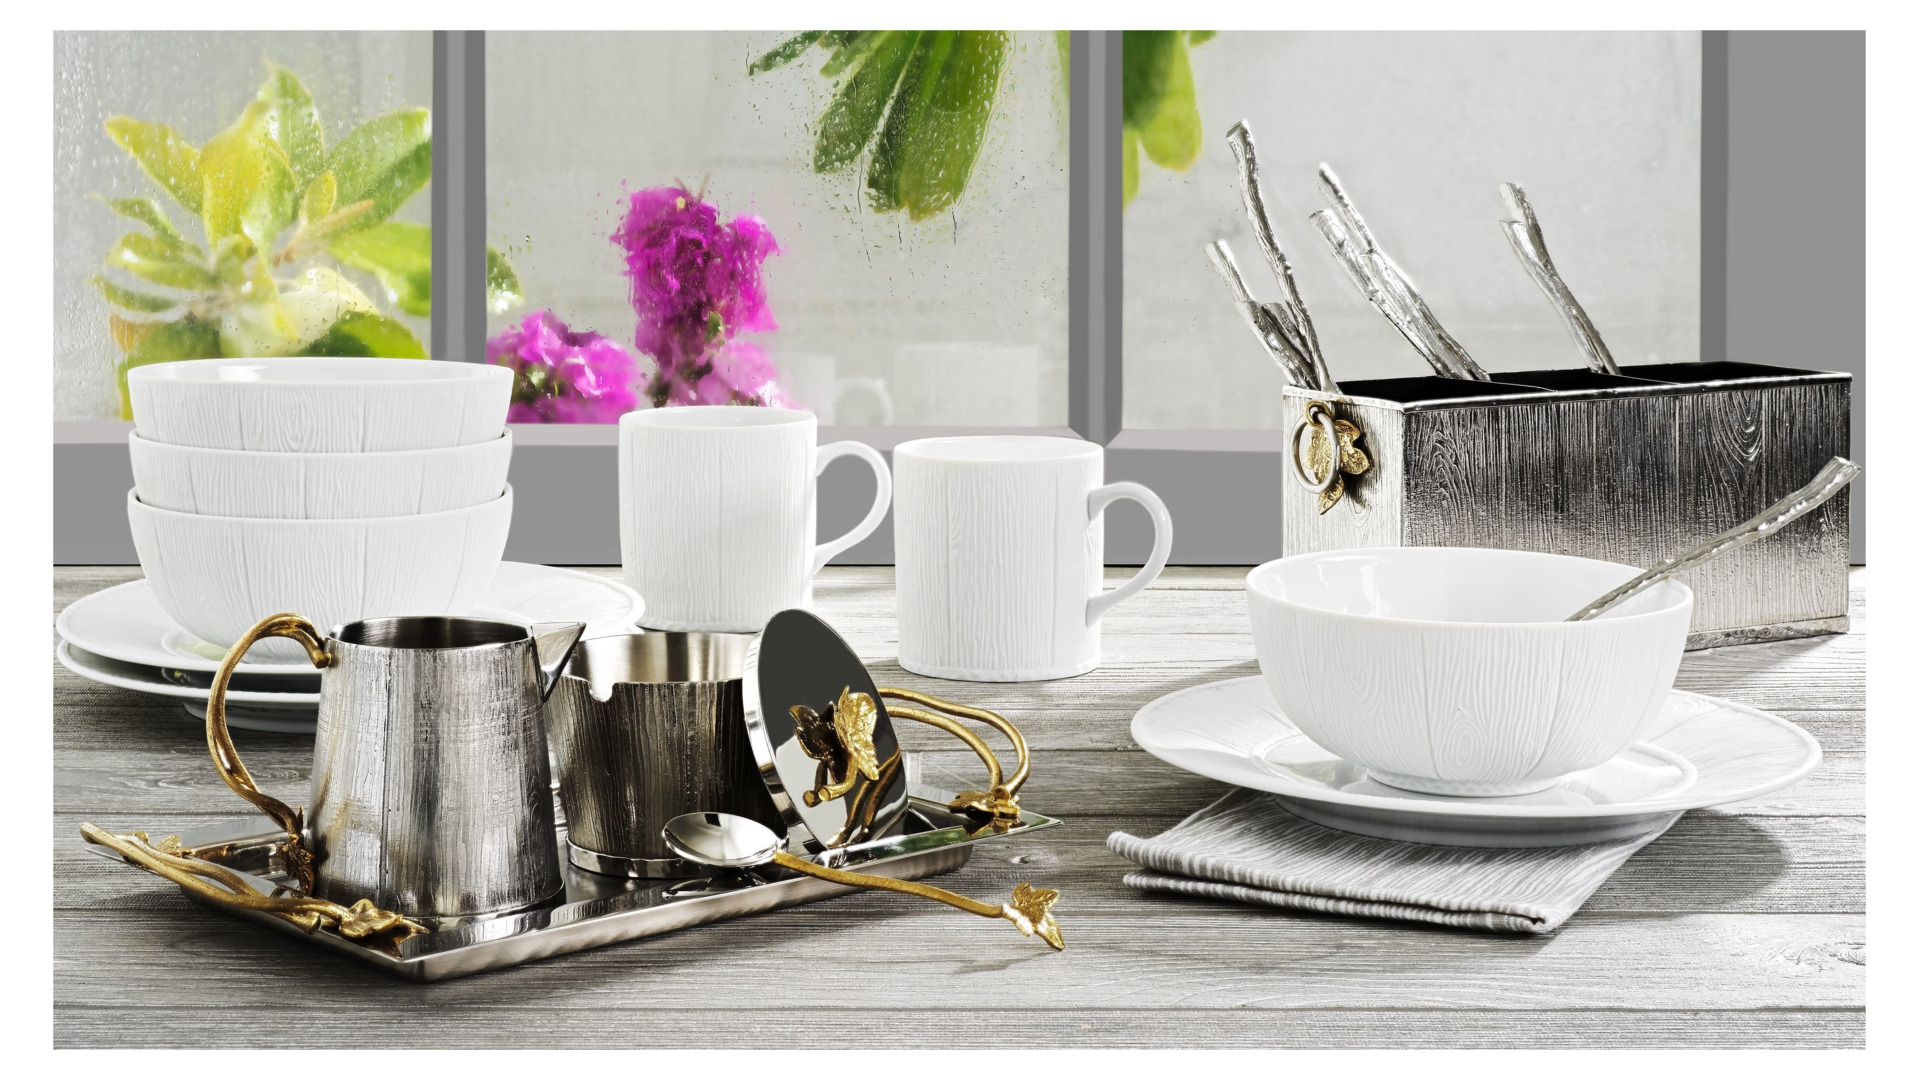 Сервиз чайно-столовый Michael Aram Плющ и дуб на 6 персон 24 предмета, фарфор